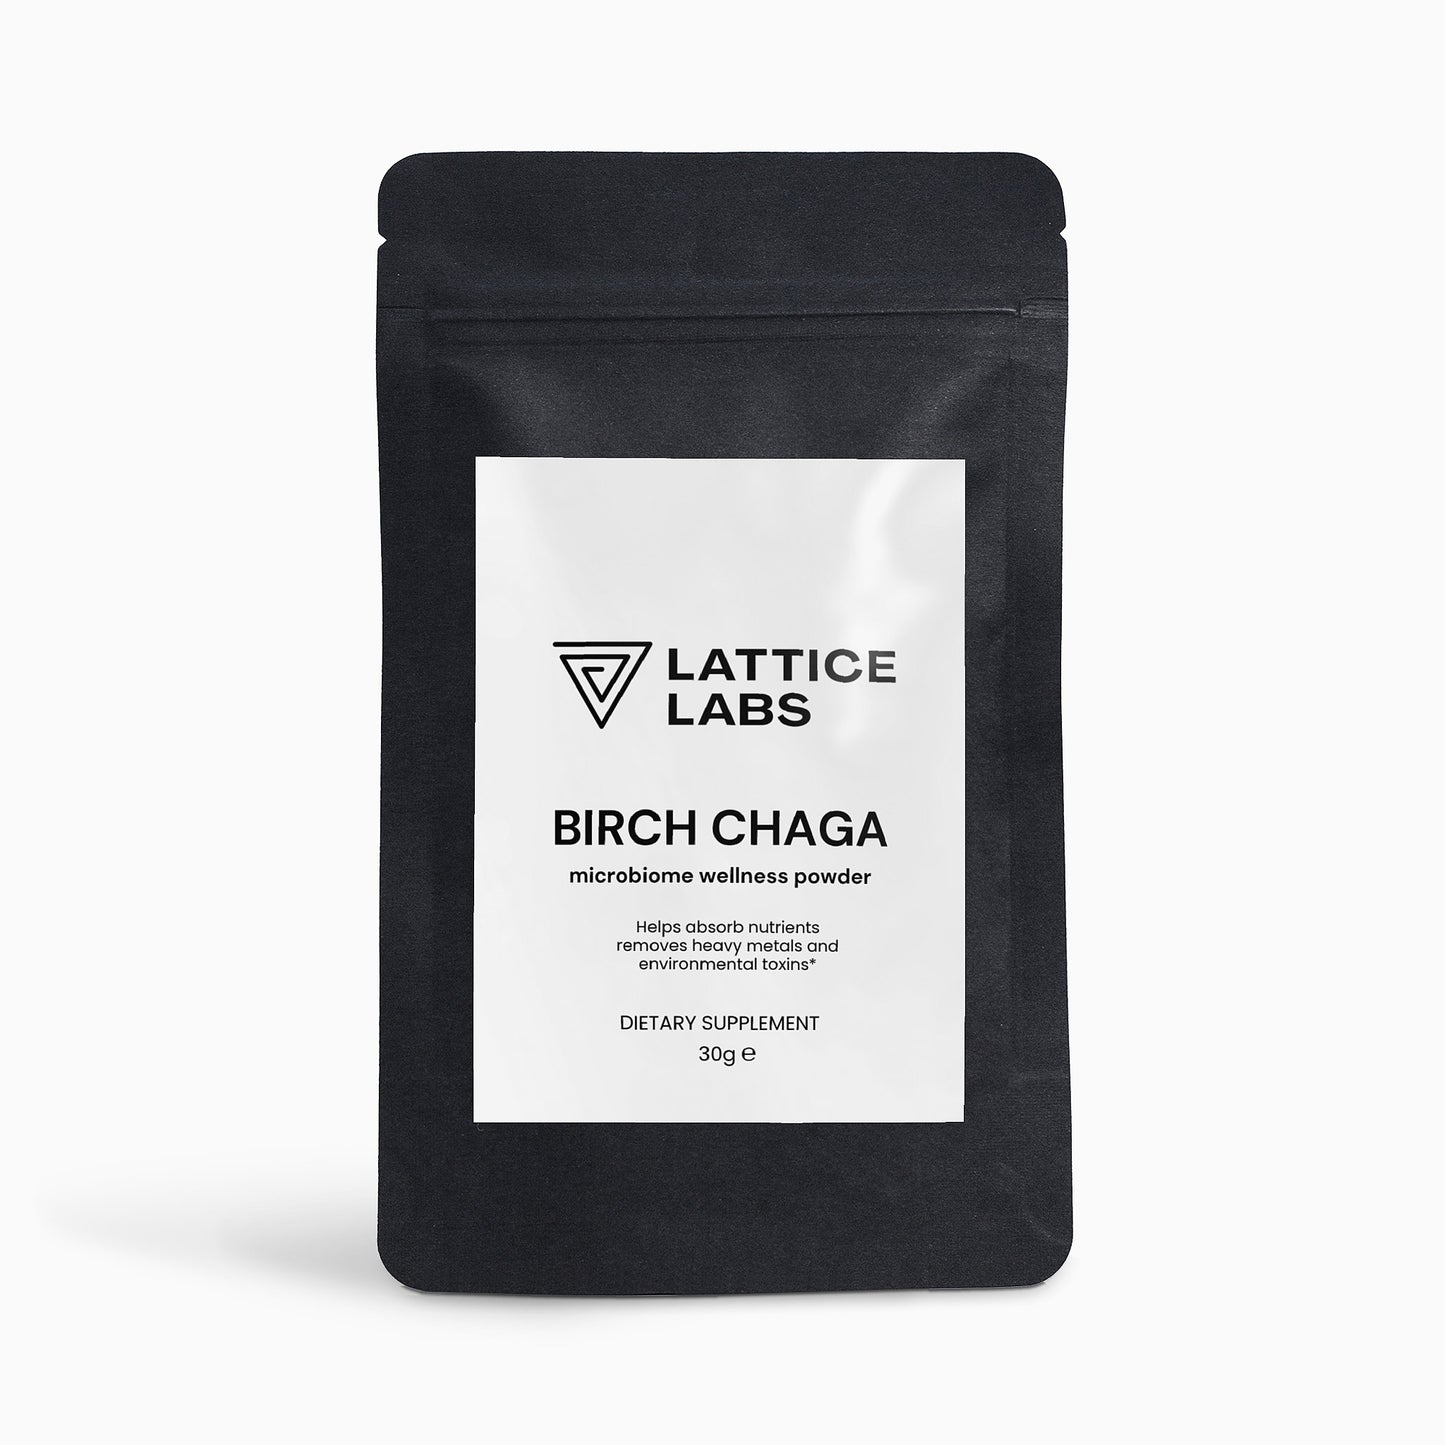 Lattice Labs Birch Chaga Microbiome Wellness Powder